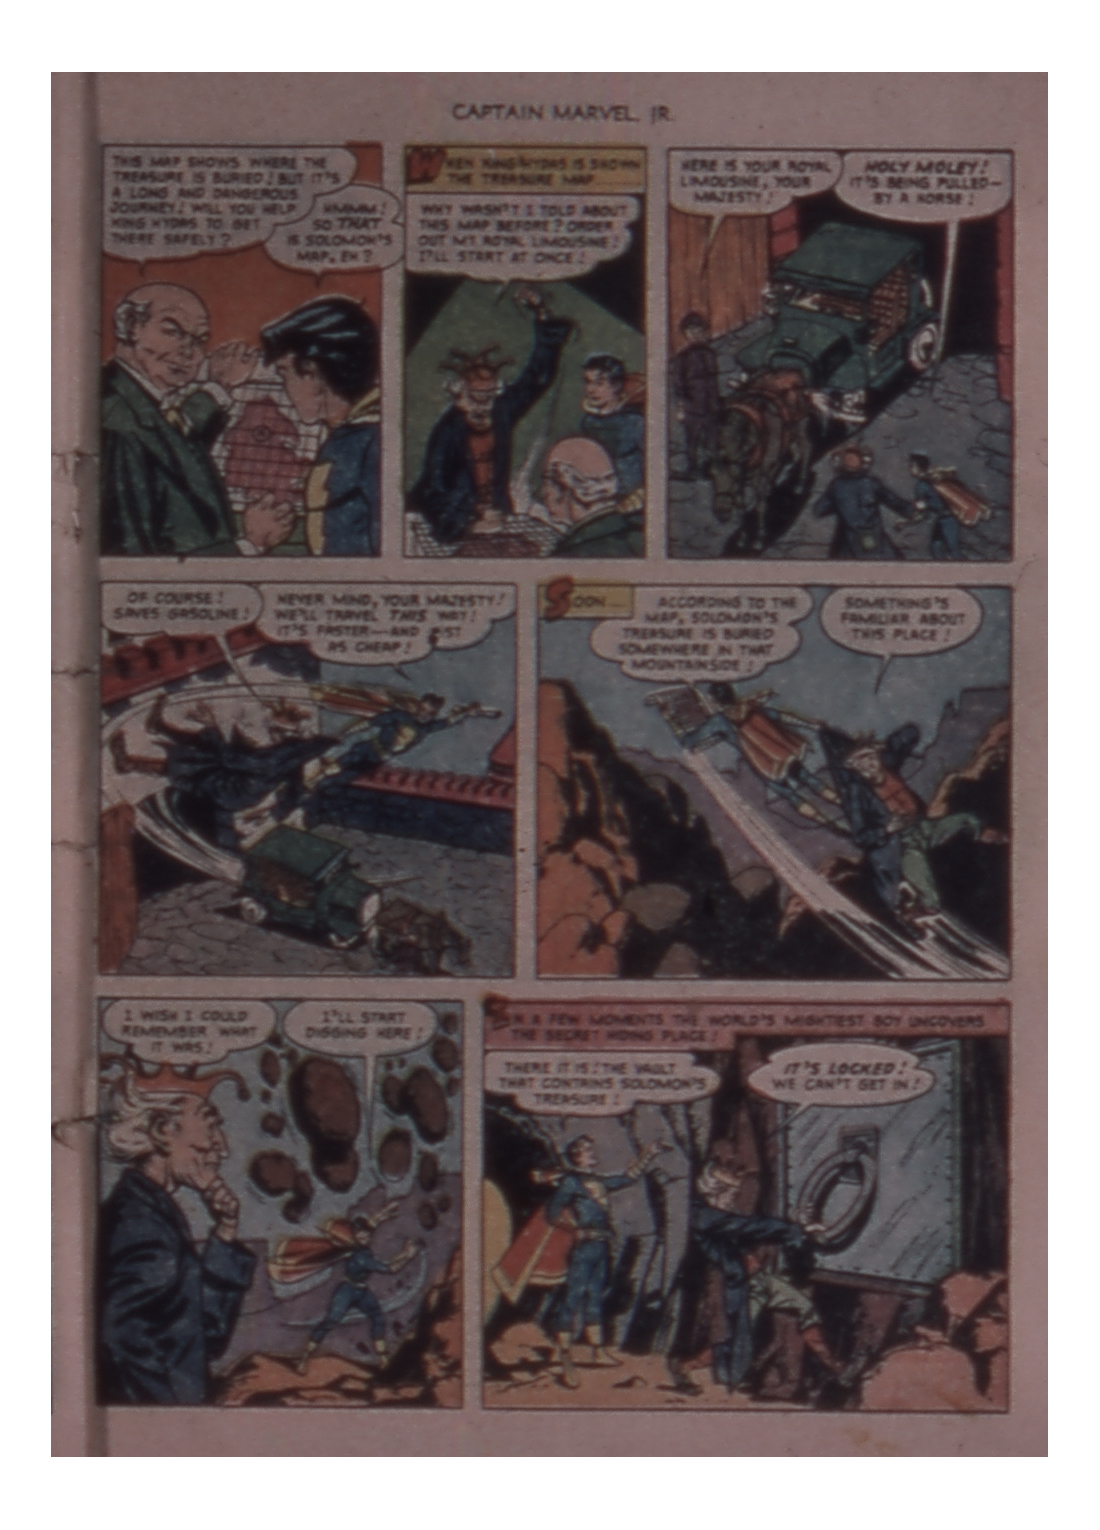 Read online Captain Marvel, Jr. comic -  Issue #103 - 21